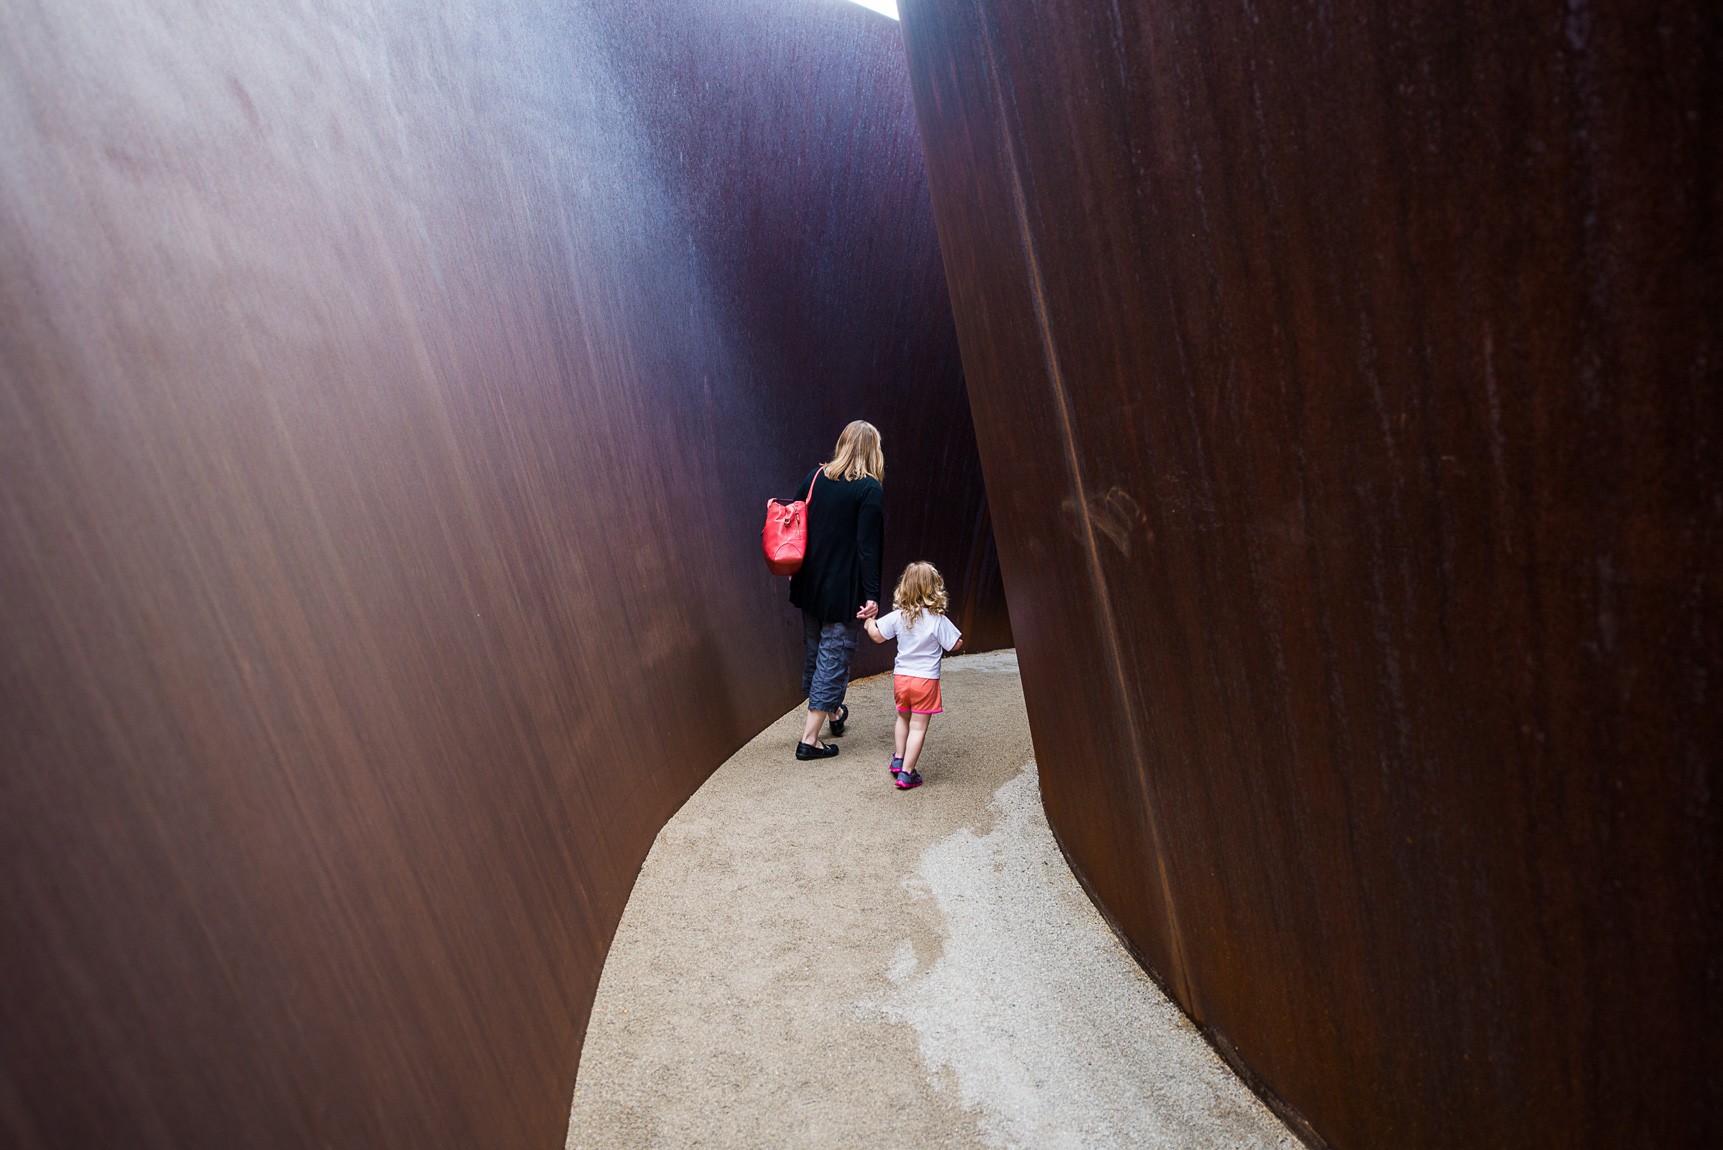 A parent and child hold hands and walk inside Richard Serra's "Joe."